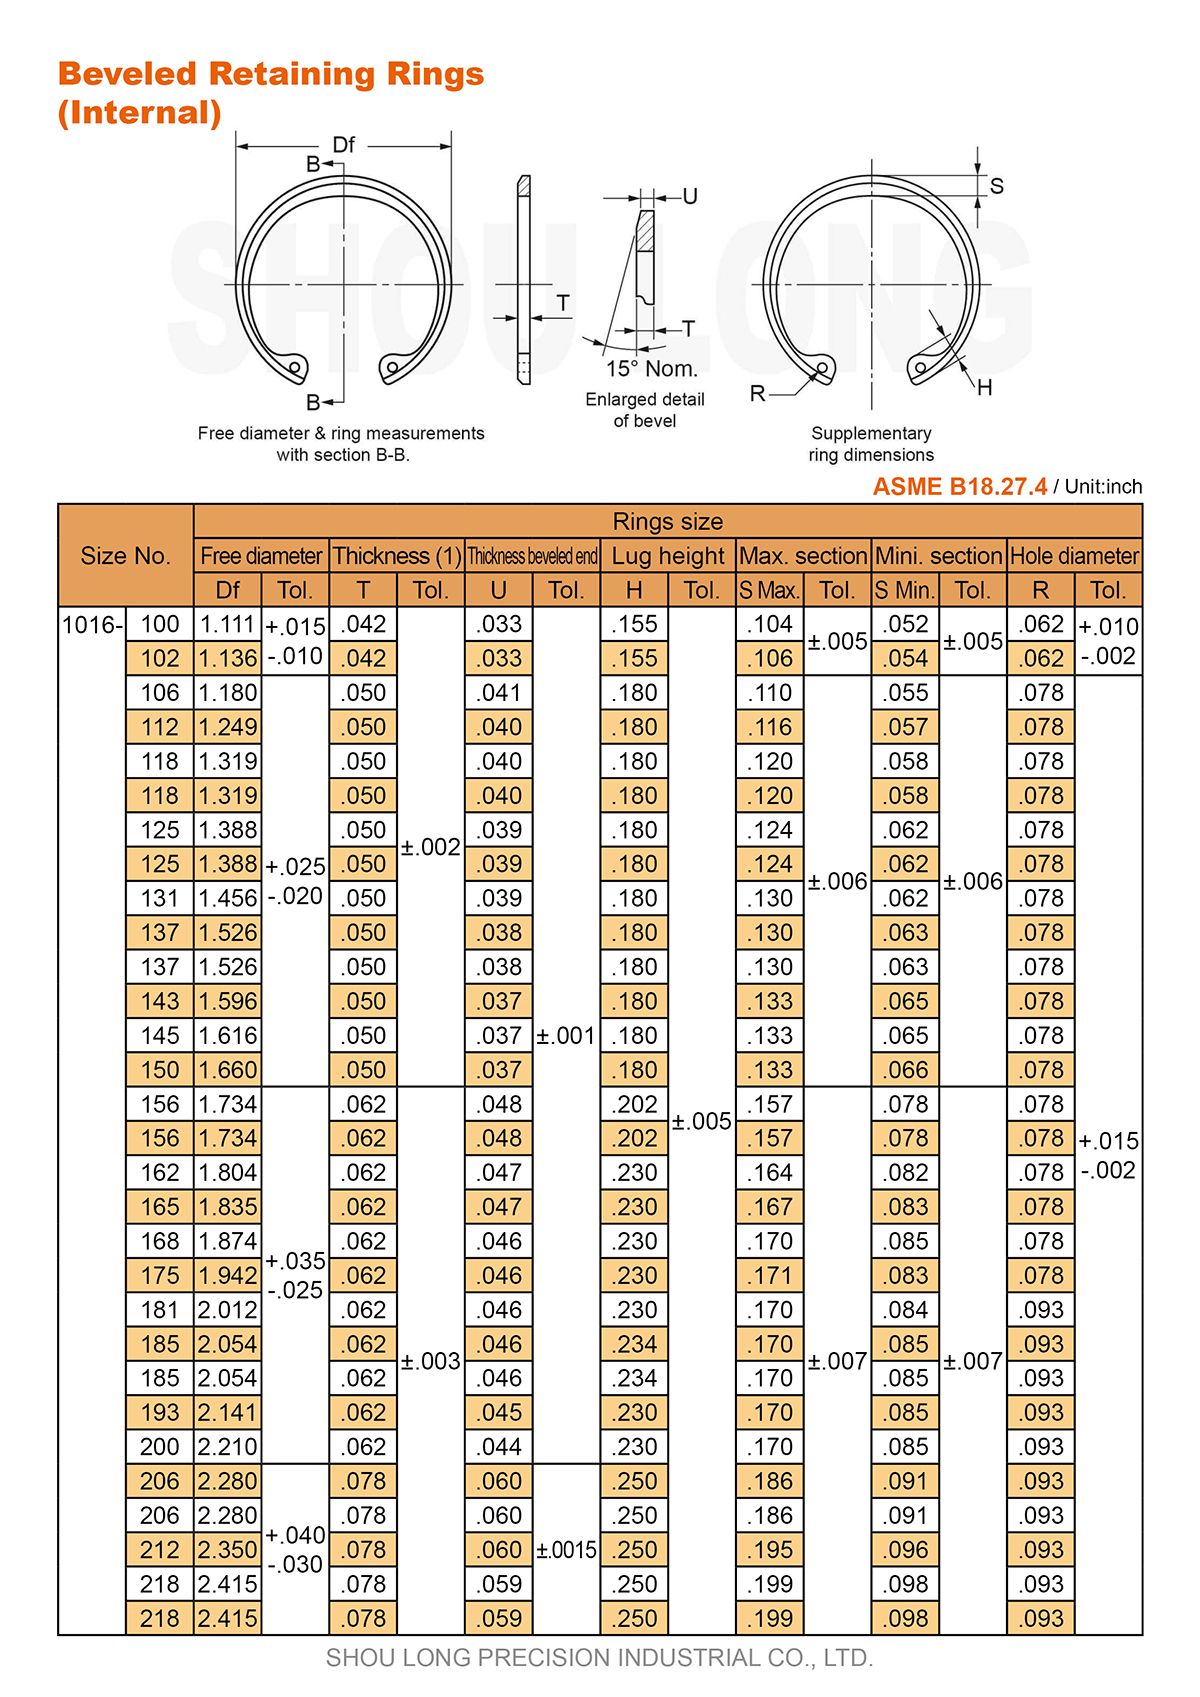 Especificación de Anillos de Retención Biselados en Pulgadas para Agujeros ASME/ANSI B18.27.4-1